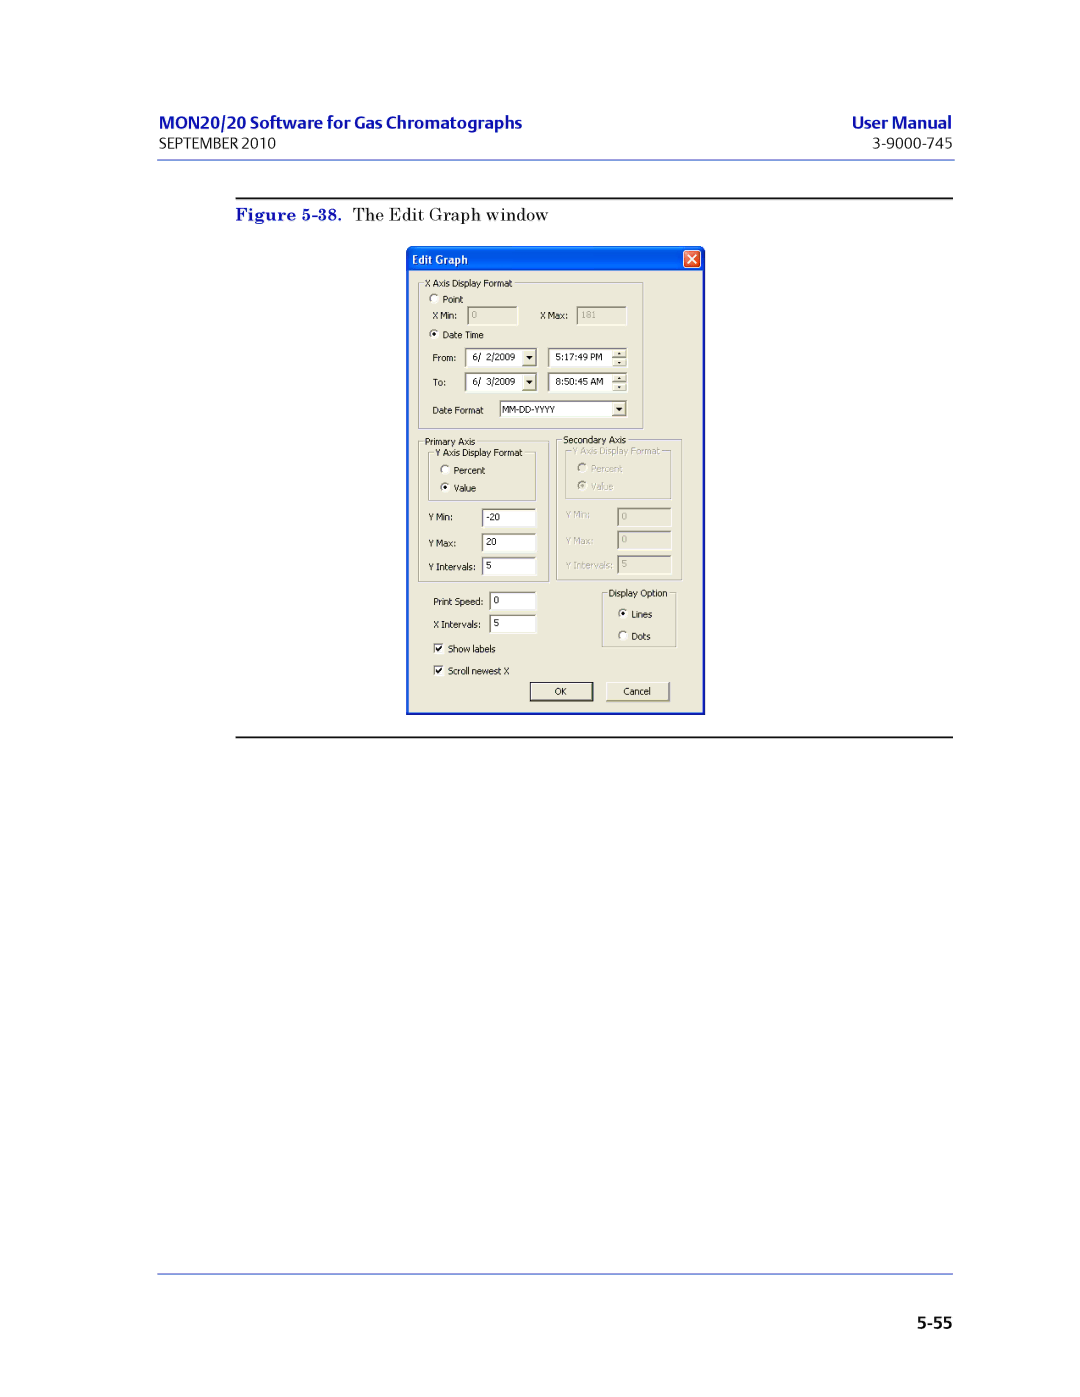 Emerson Process Management 3-9000-745 manual The Edit Graph window 